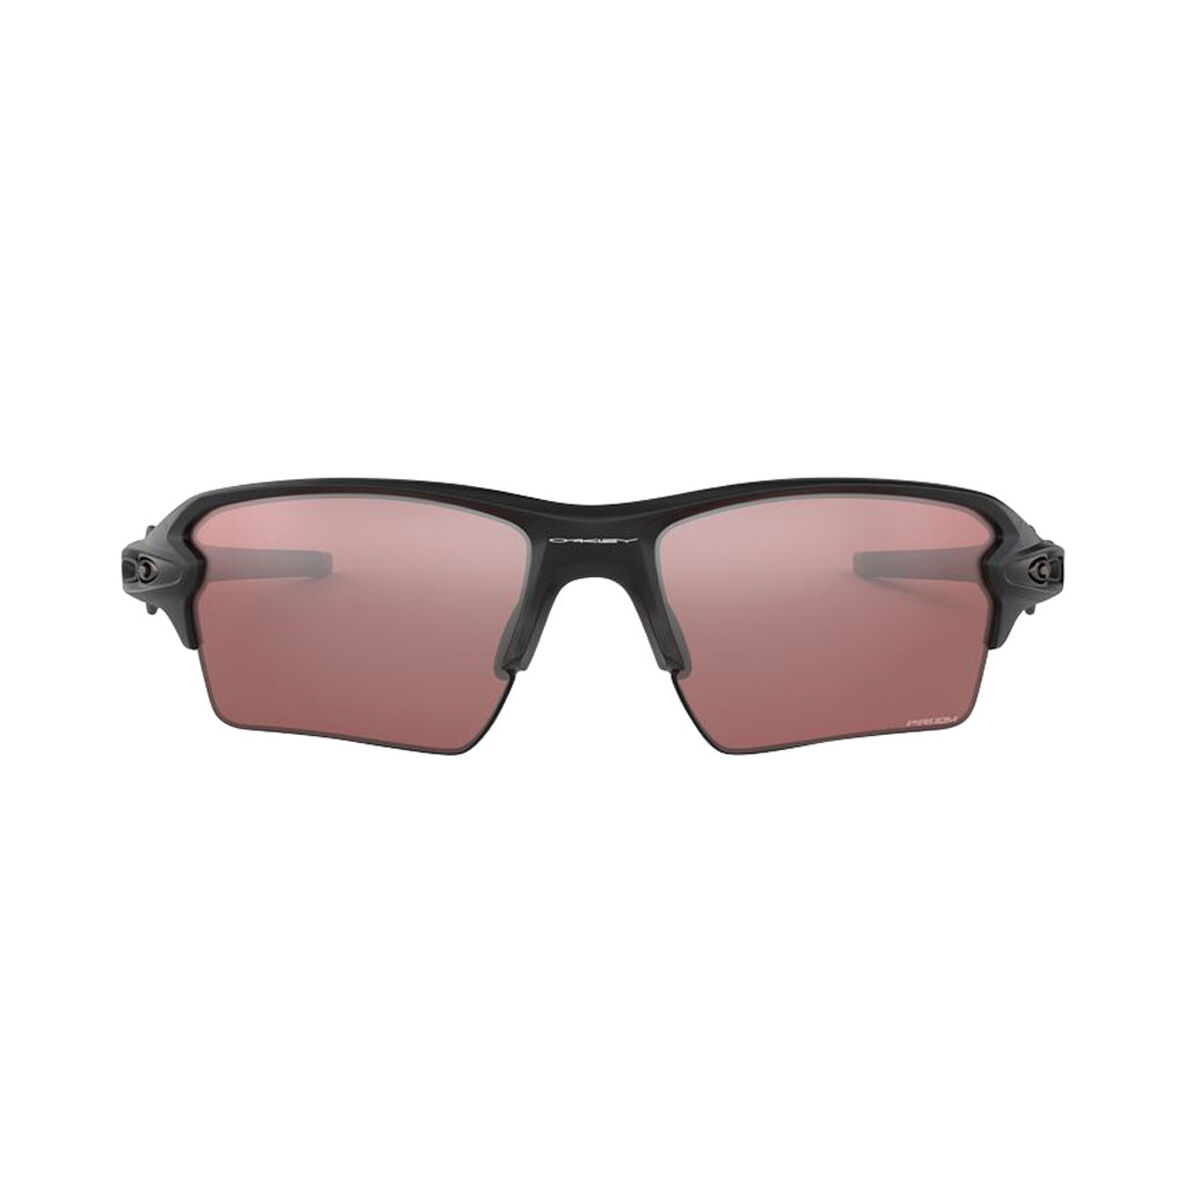 Update 201+ rebel sport sunglasses latest